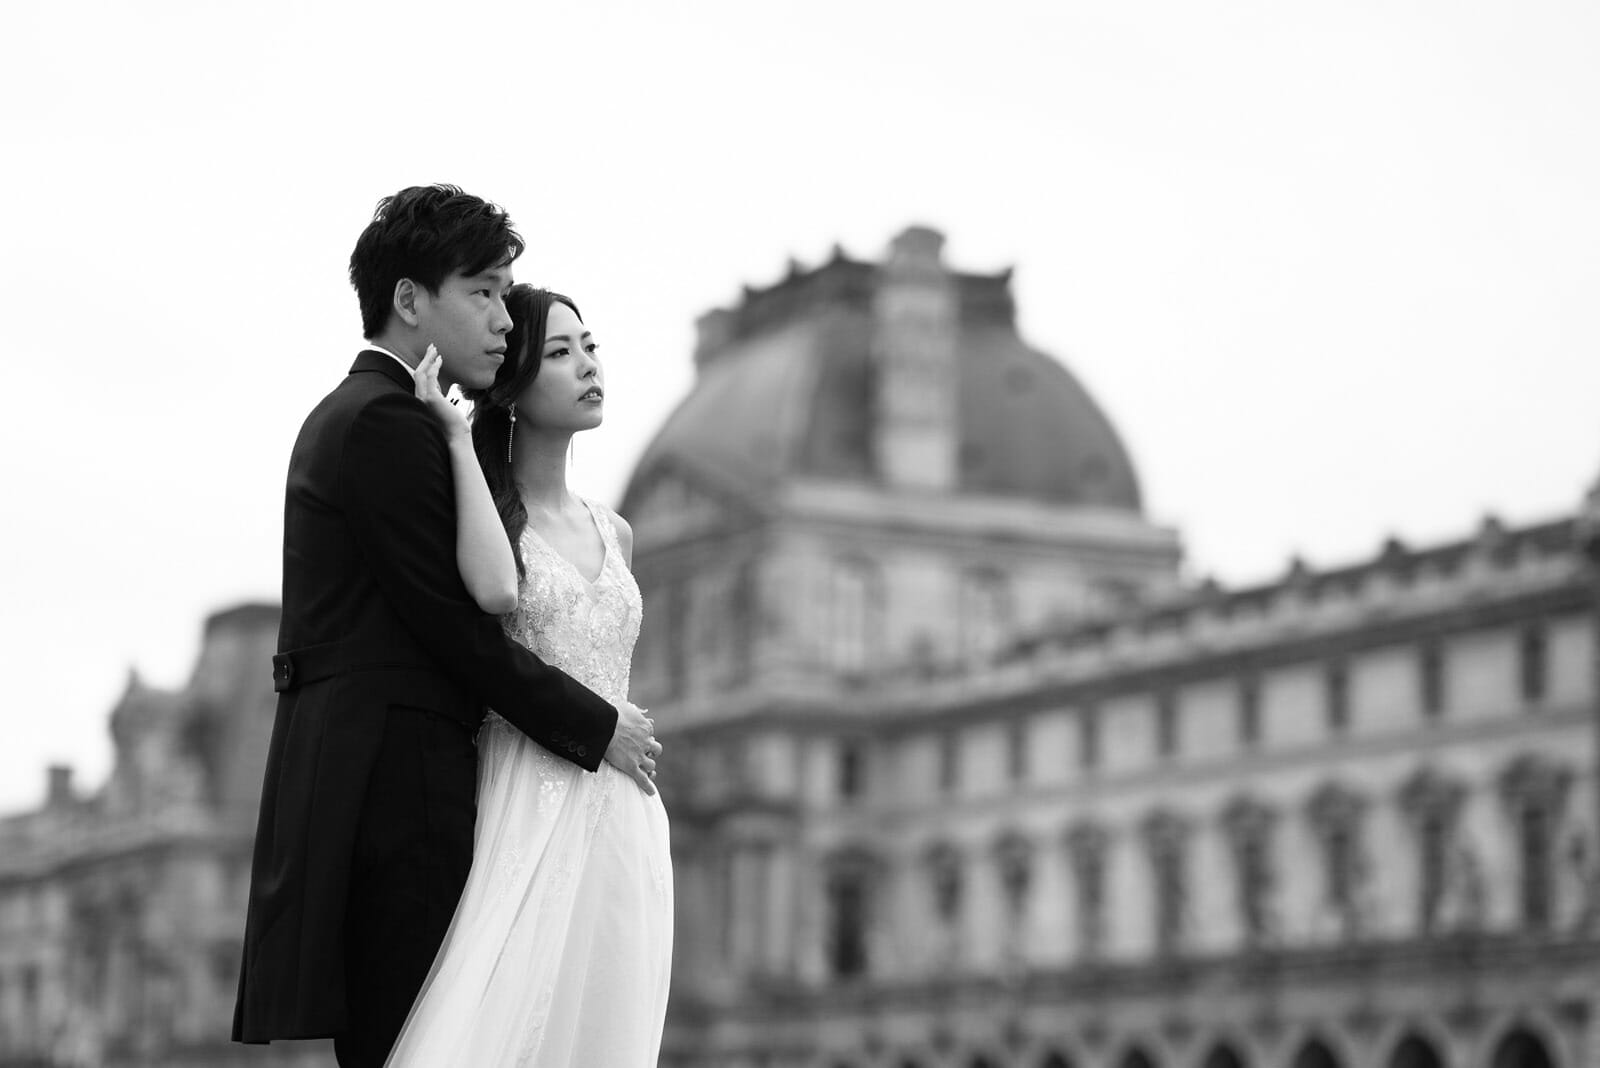 Dreamy pre-wedding photos at the Louvre Museum by Paris photographer Cengiz